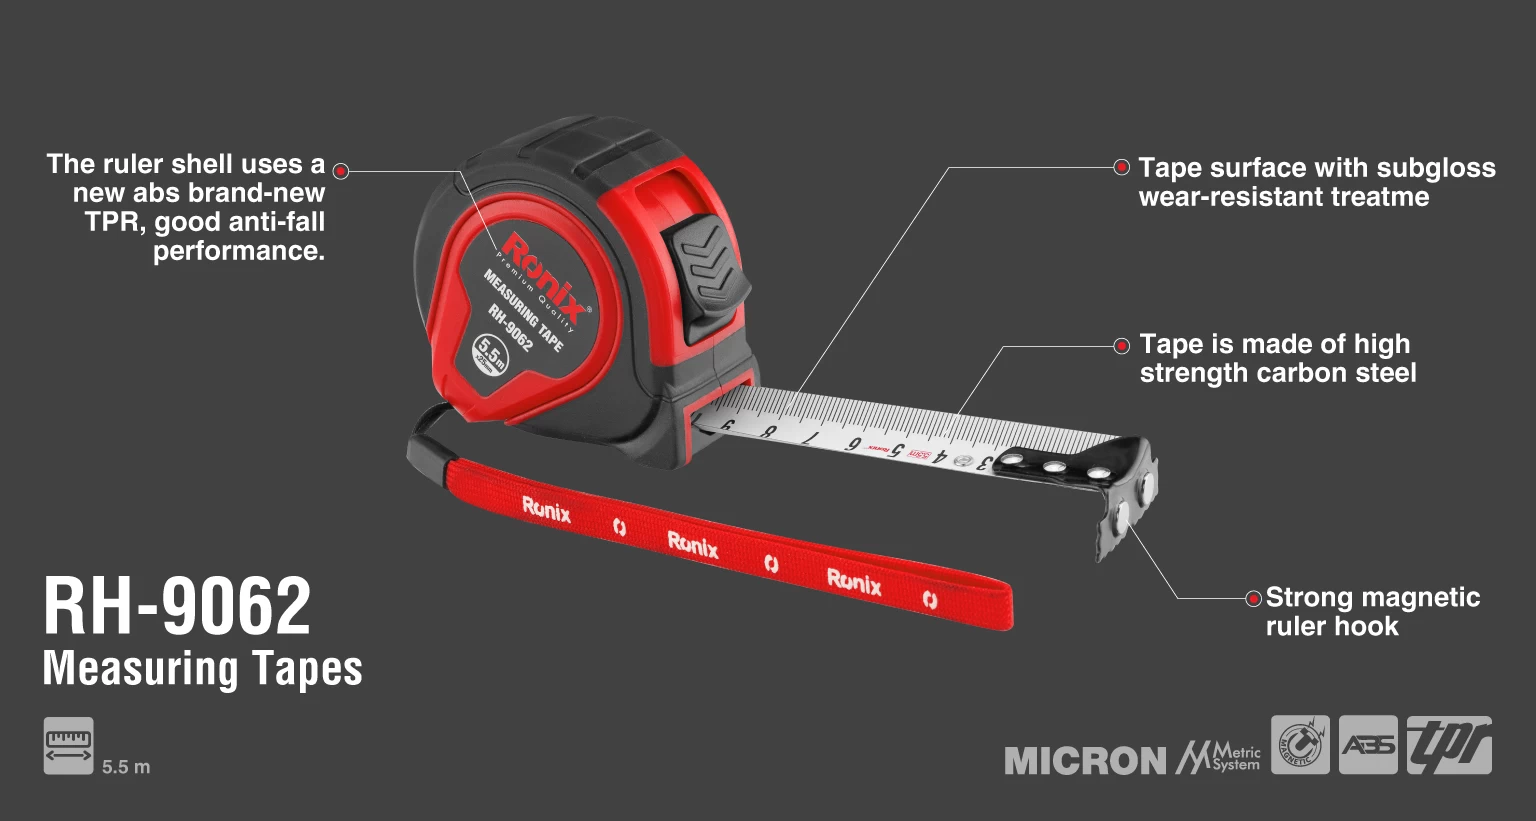 Measuring tape 5.5m-Micron model_details